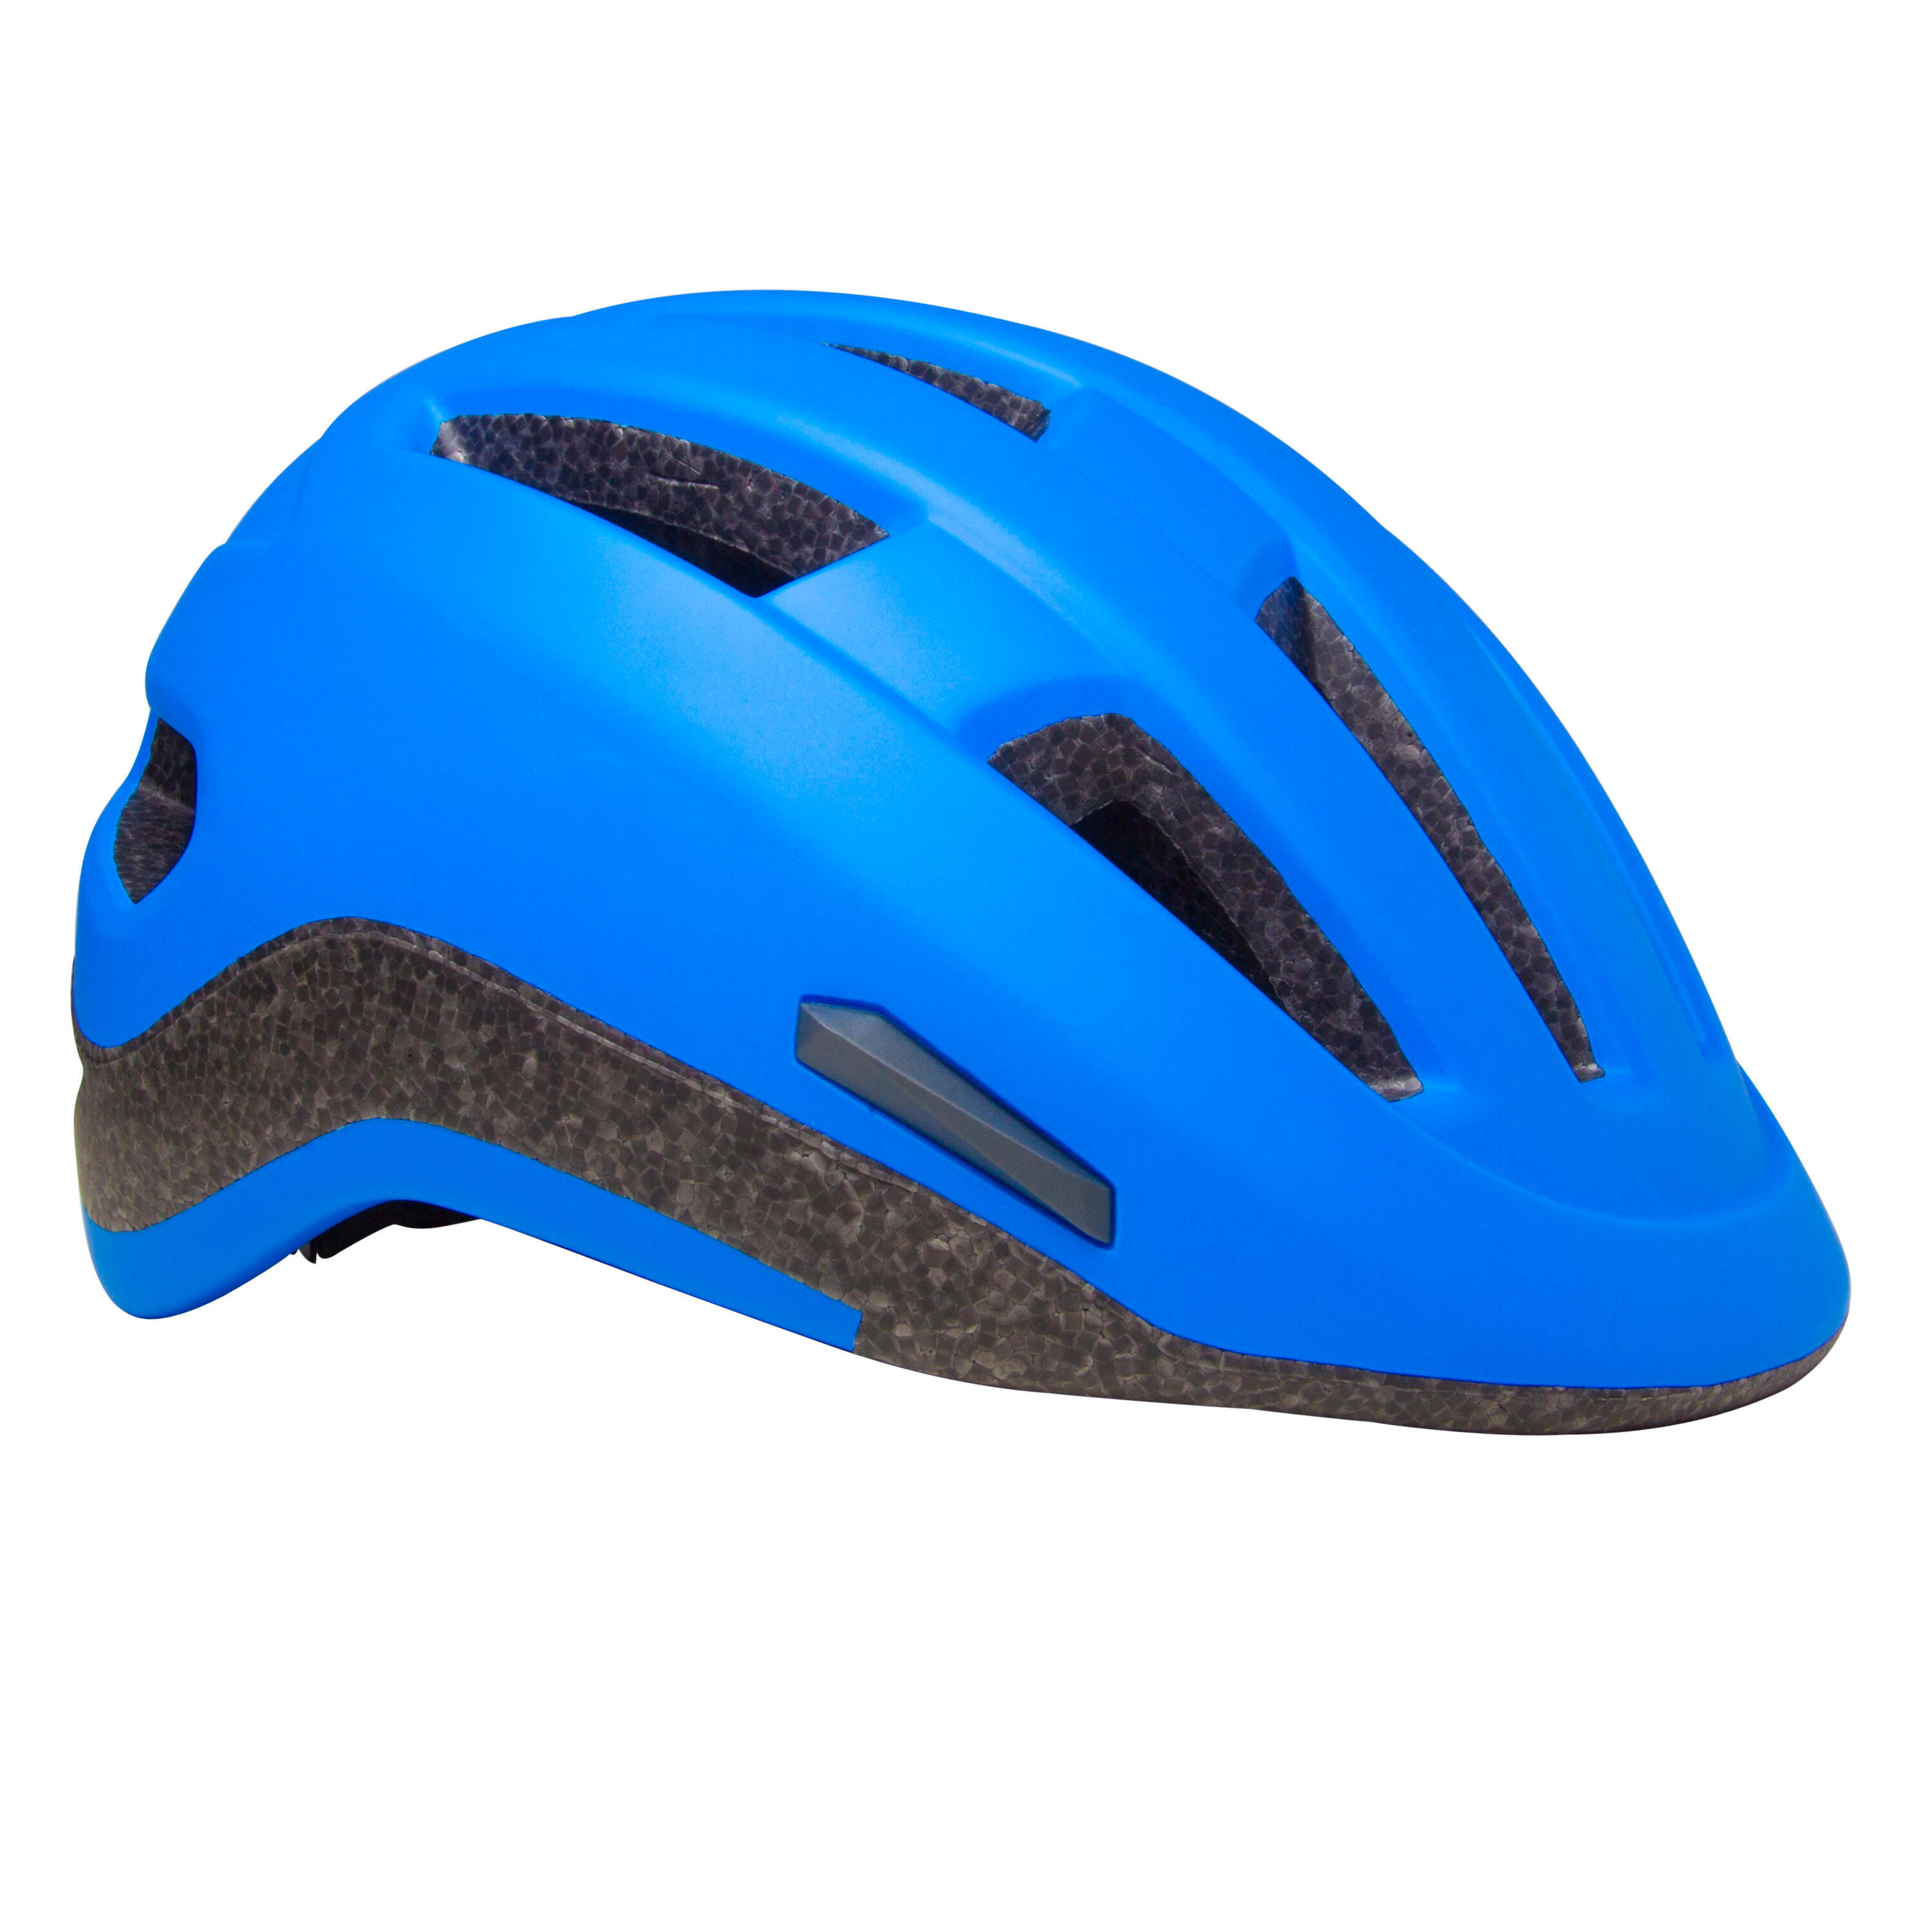 BTWIN City 500 Cycling Helmet - Blue